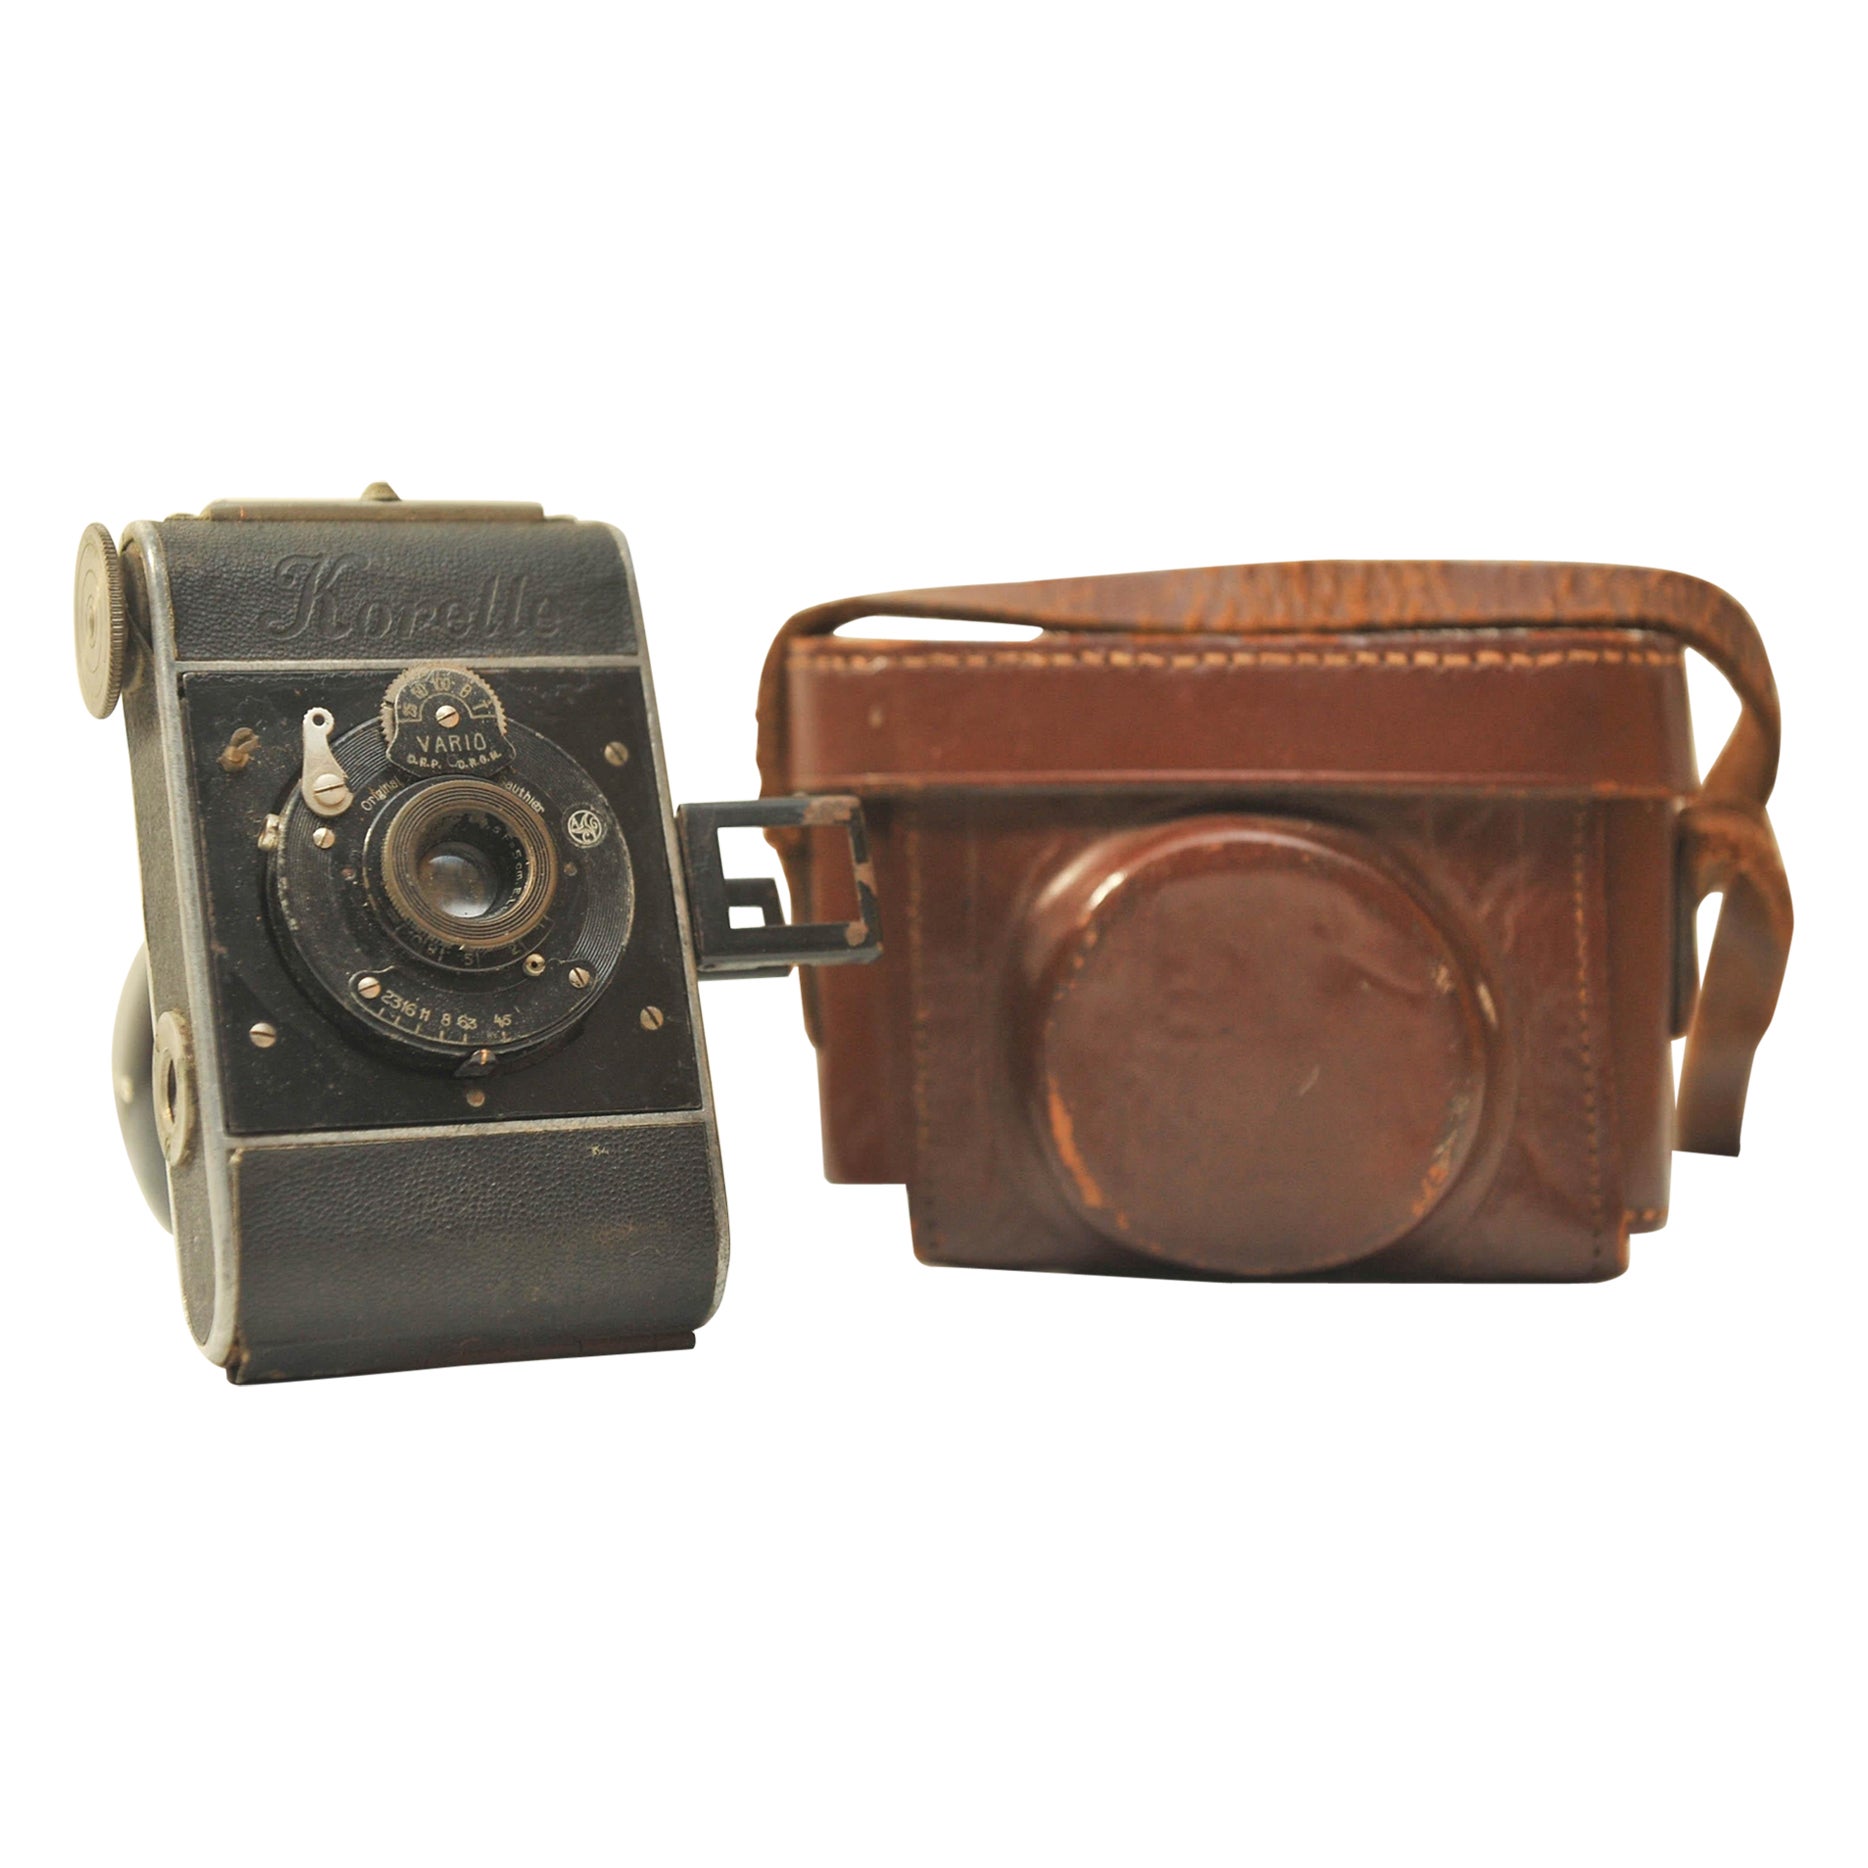 Kochmann Korelle Art Deco German Camera with Vario Leaf Shutter by Gauthier For Sale